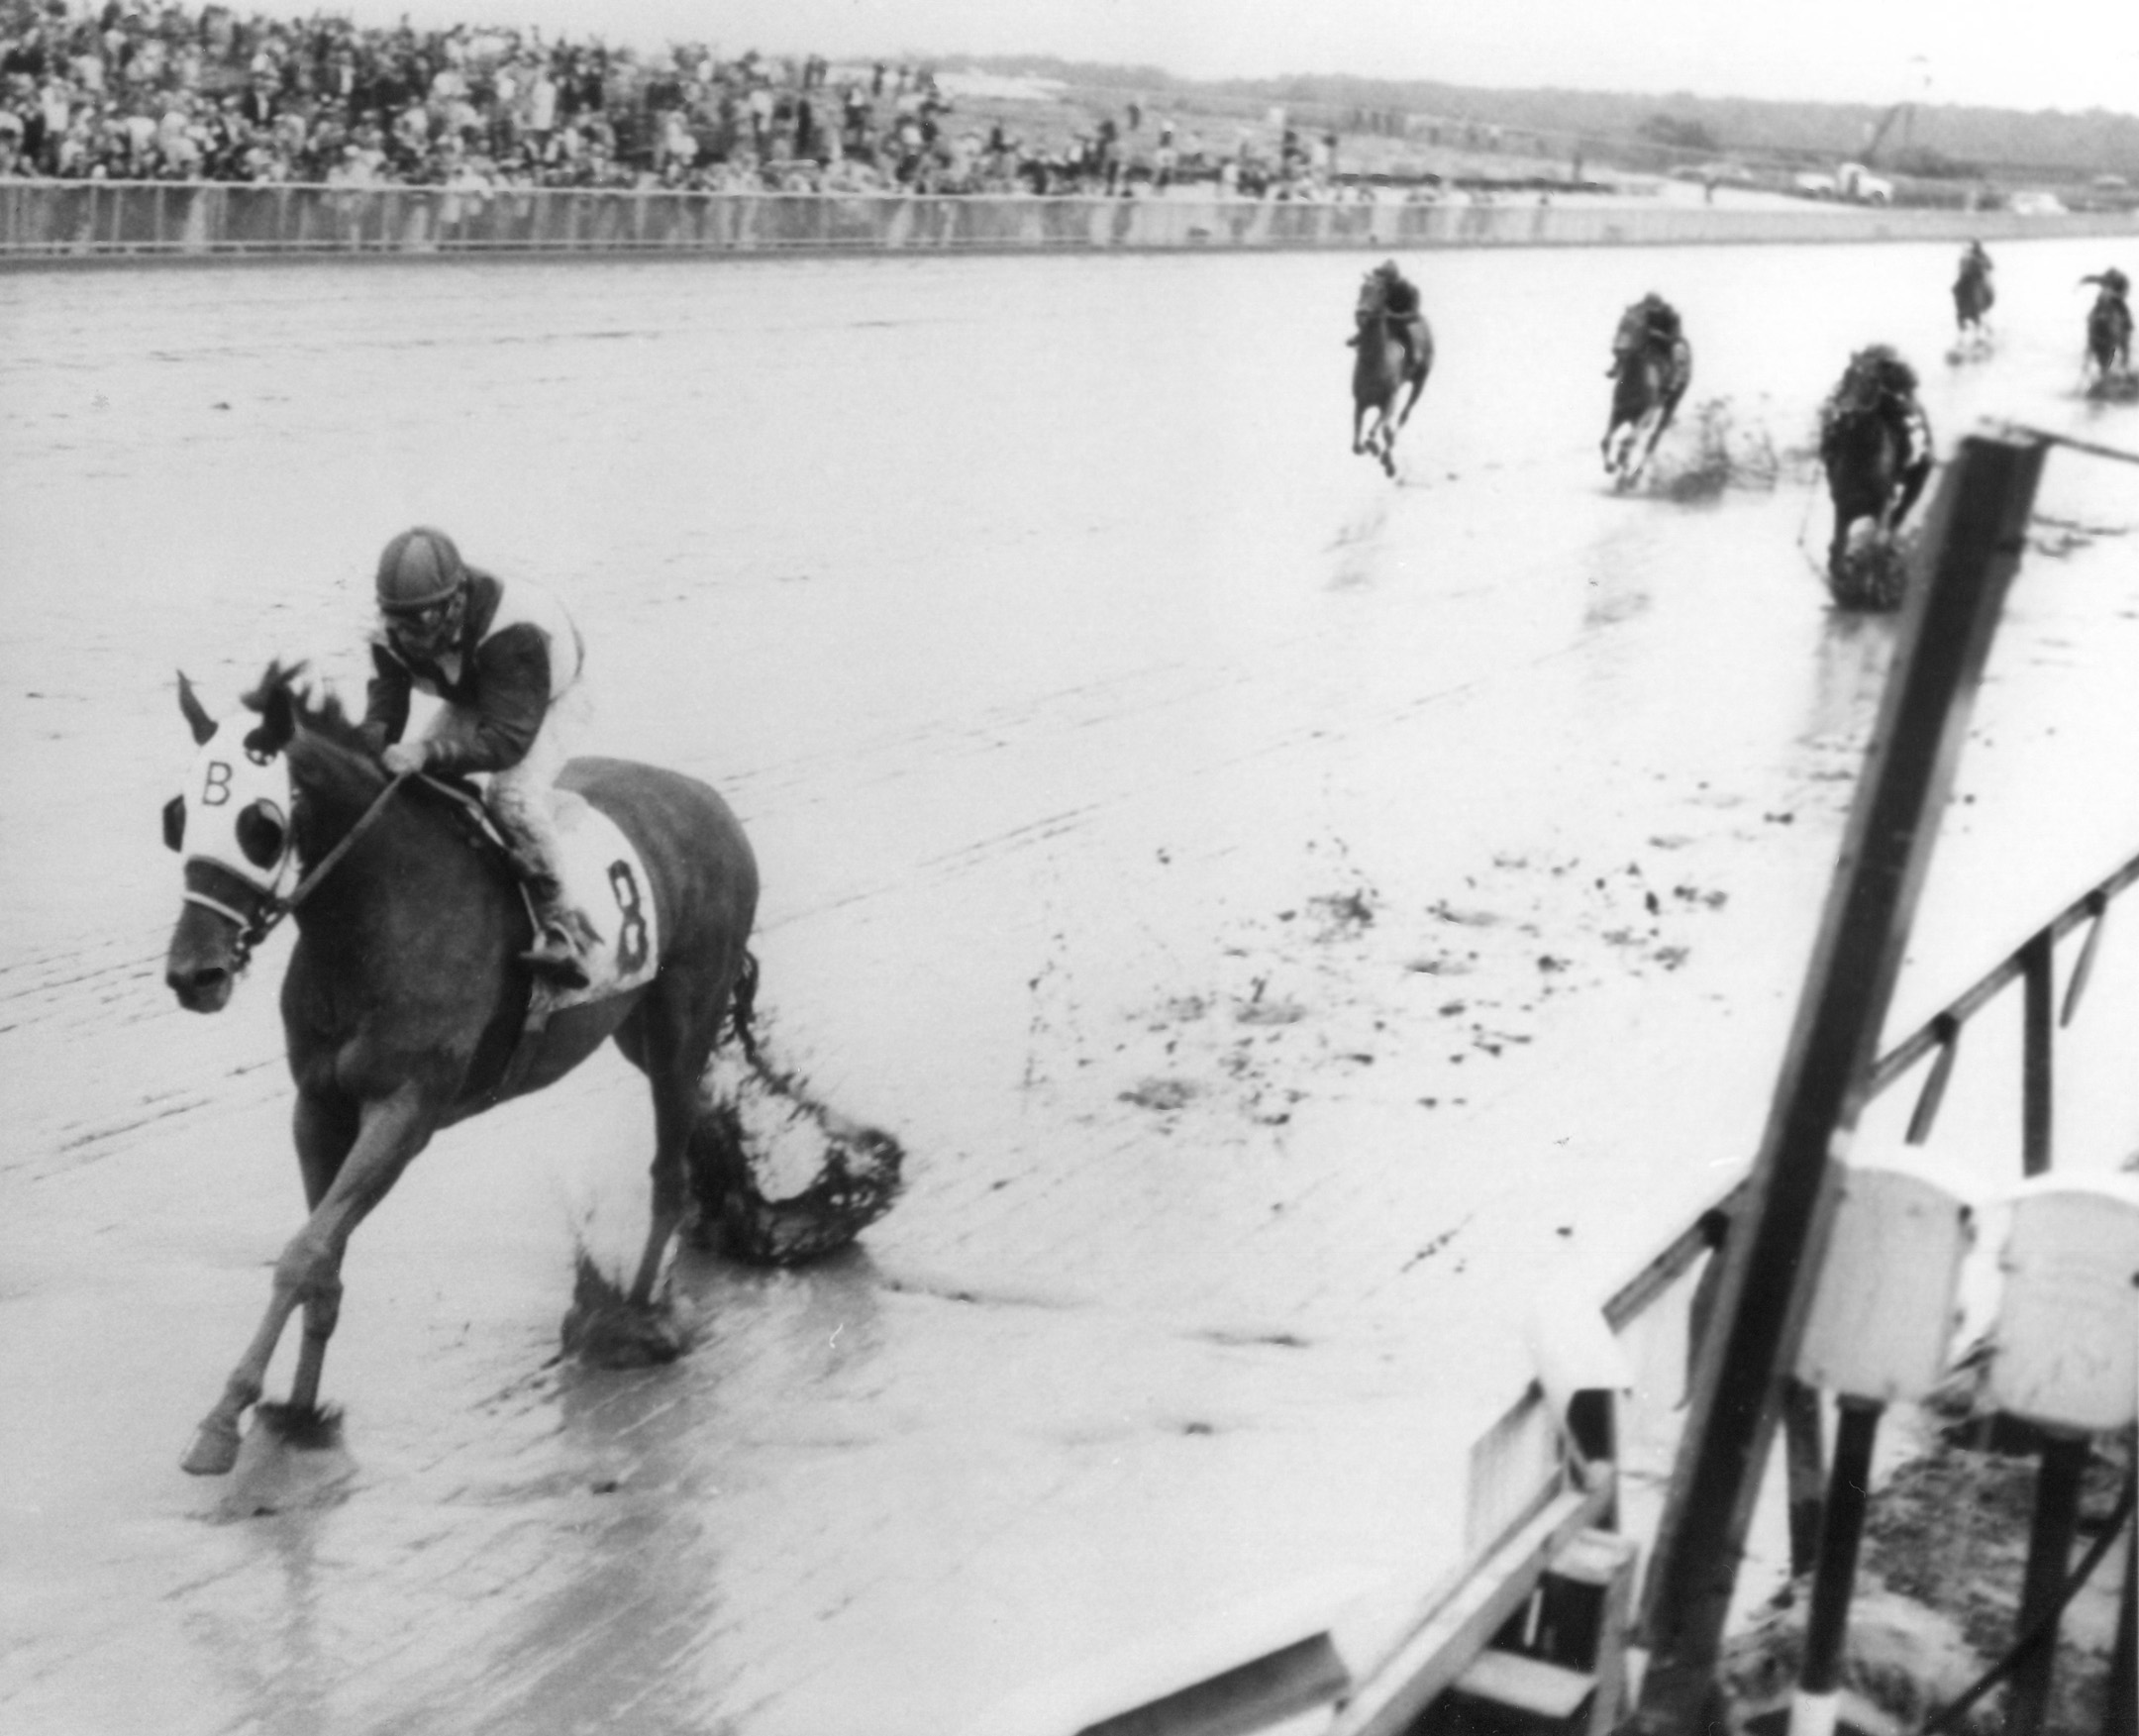 Tosmah (Sam Boulmetis up) winning the 1963 Mermaid Handicap at Atlantic City Race Course (Turfotos/Museum Collection)